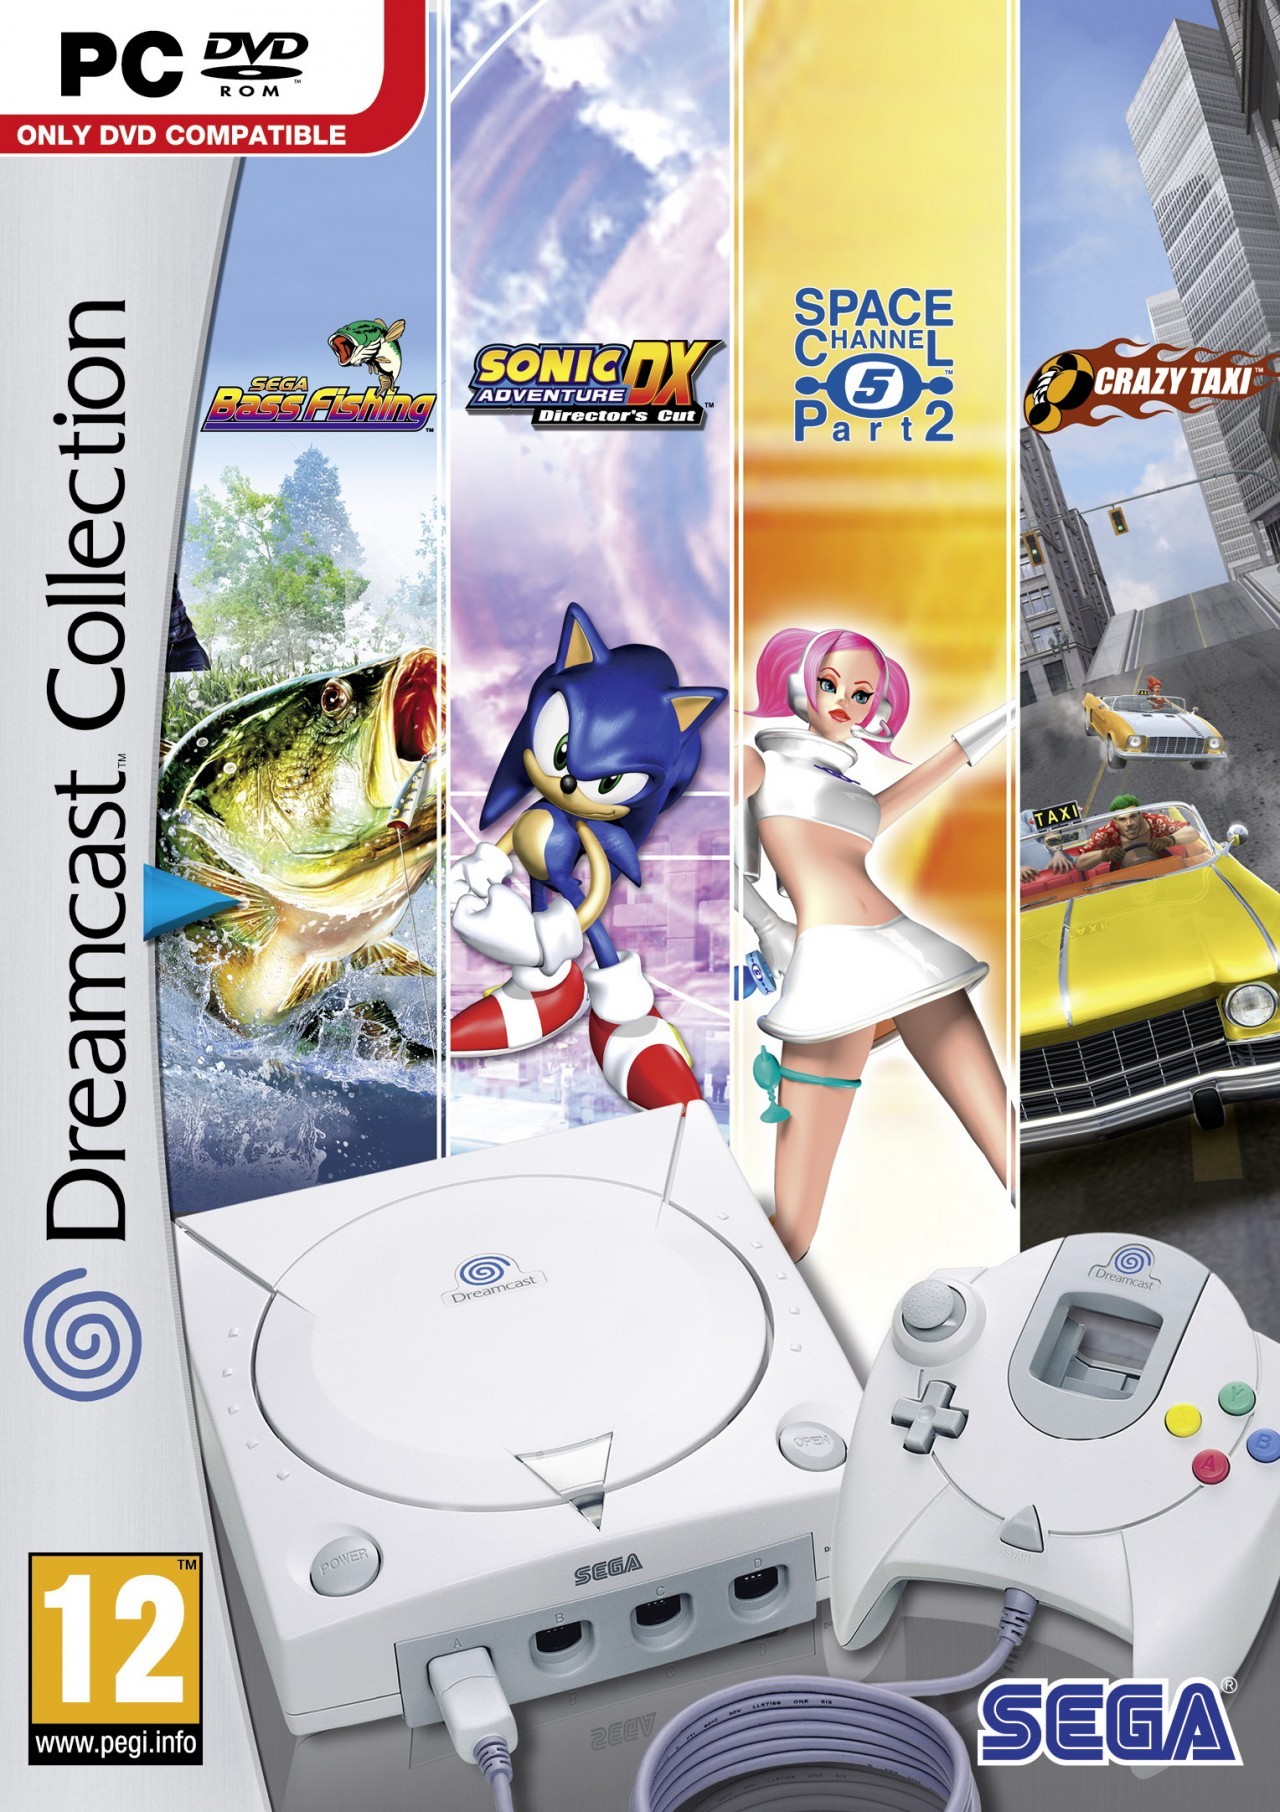 Dreamcast Games Torrent